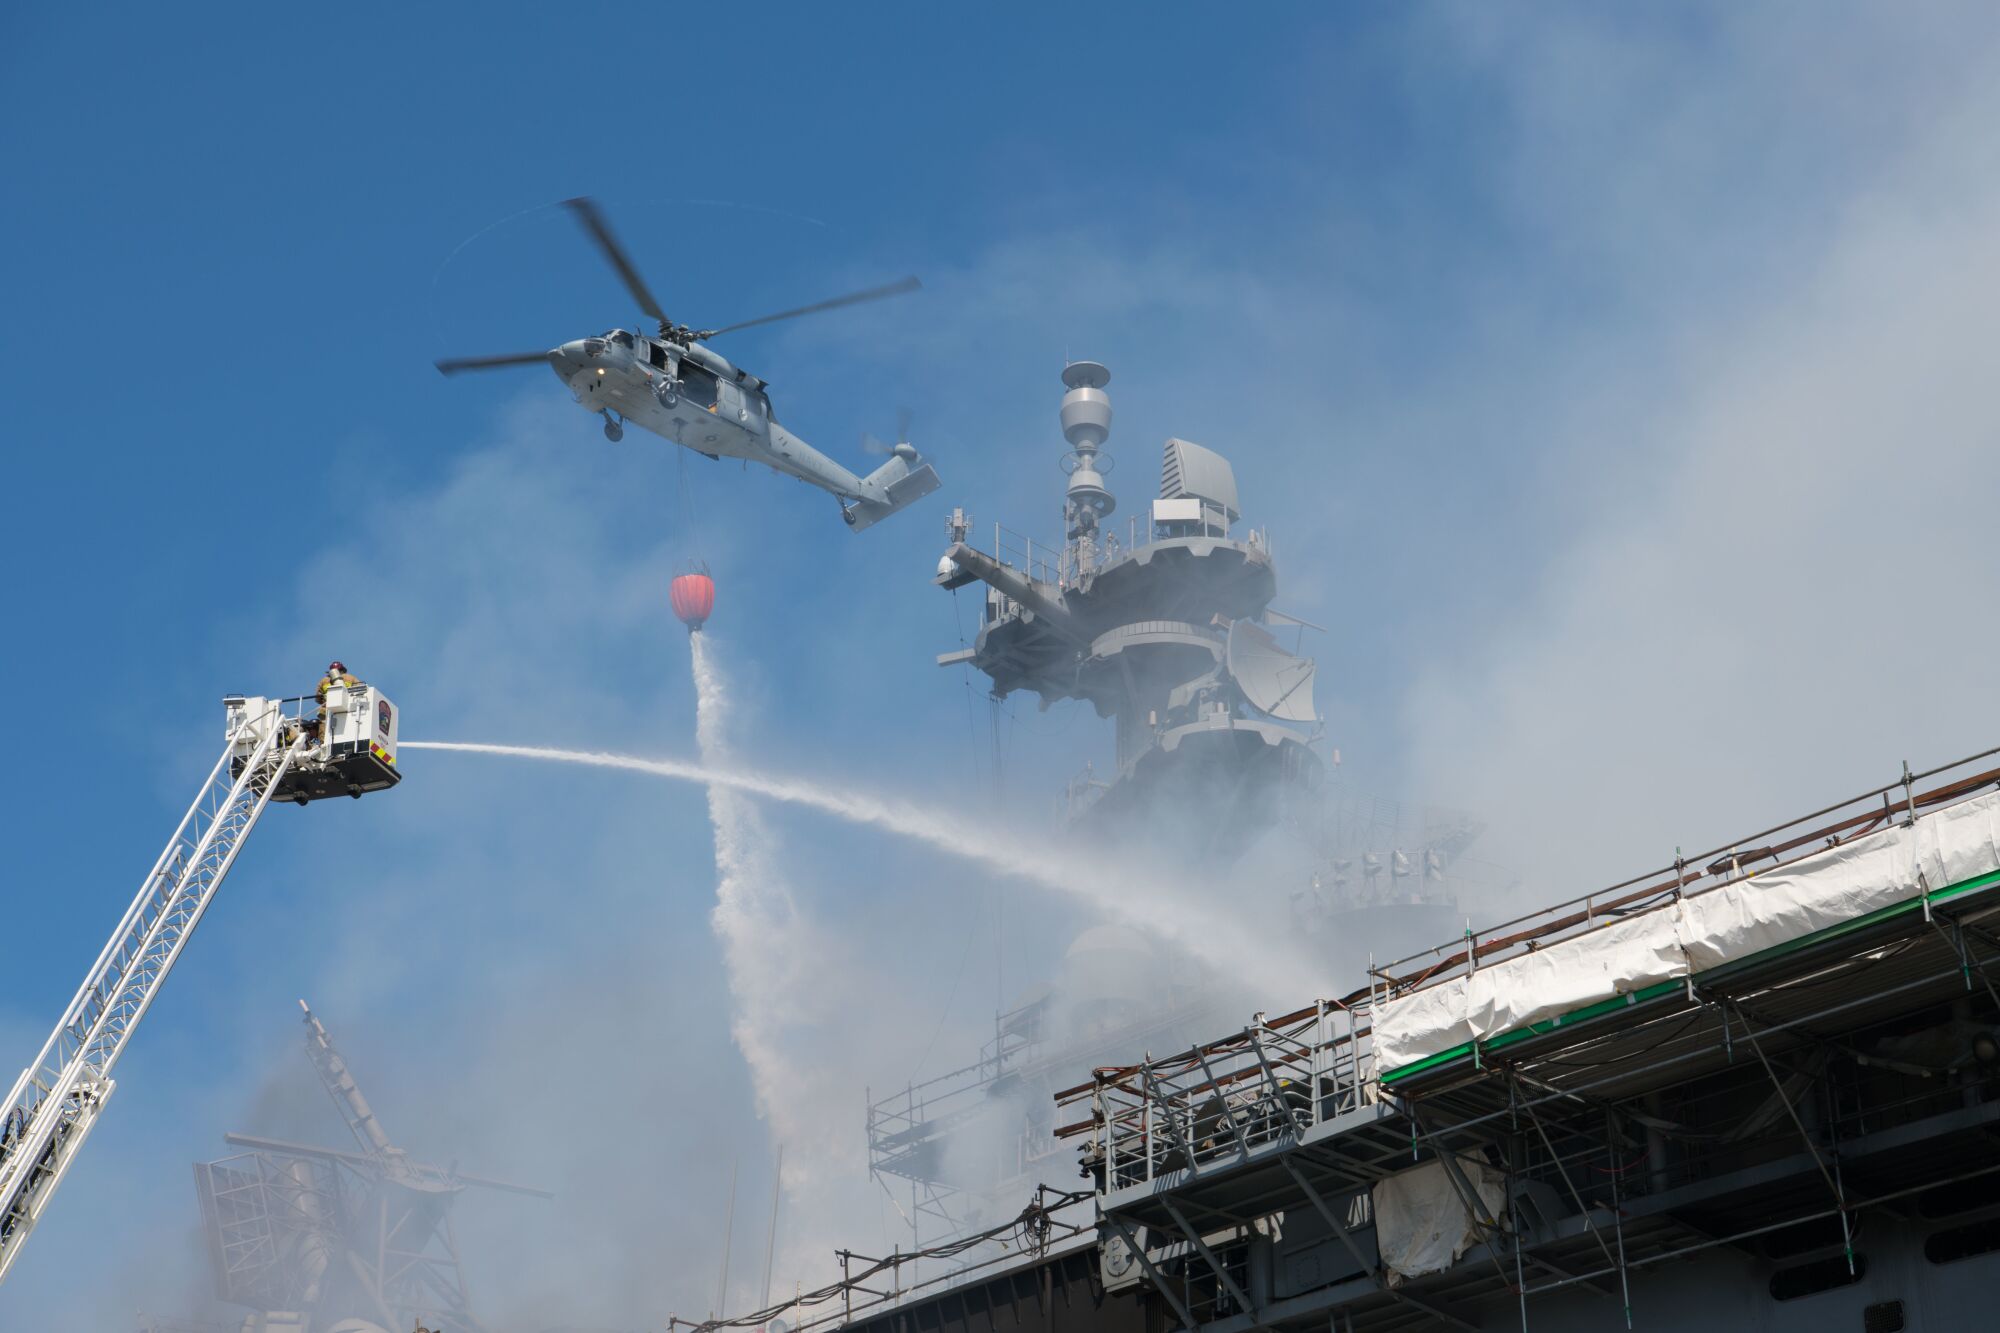 A helicopter combats a fire aboard the amphibious assault ship USS Bonhomme Richard.